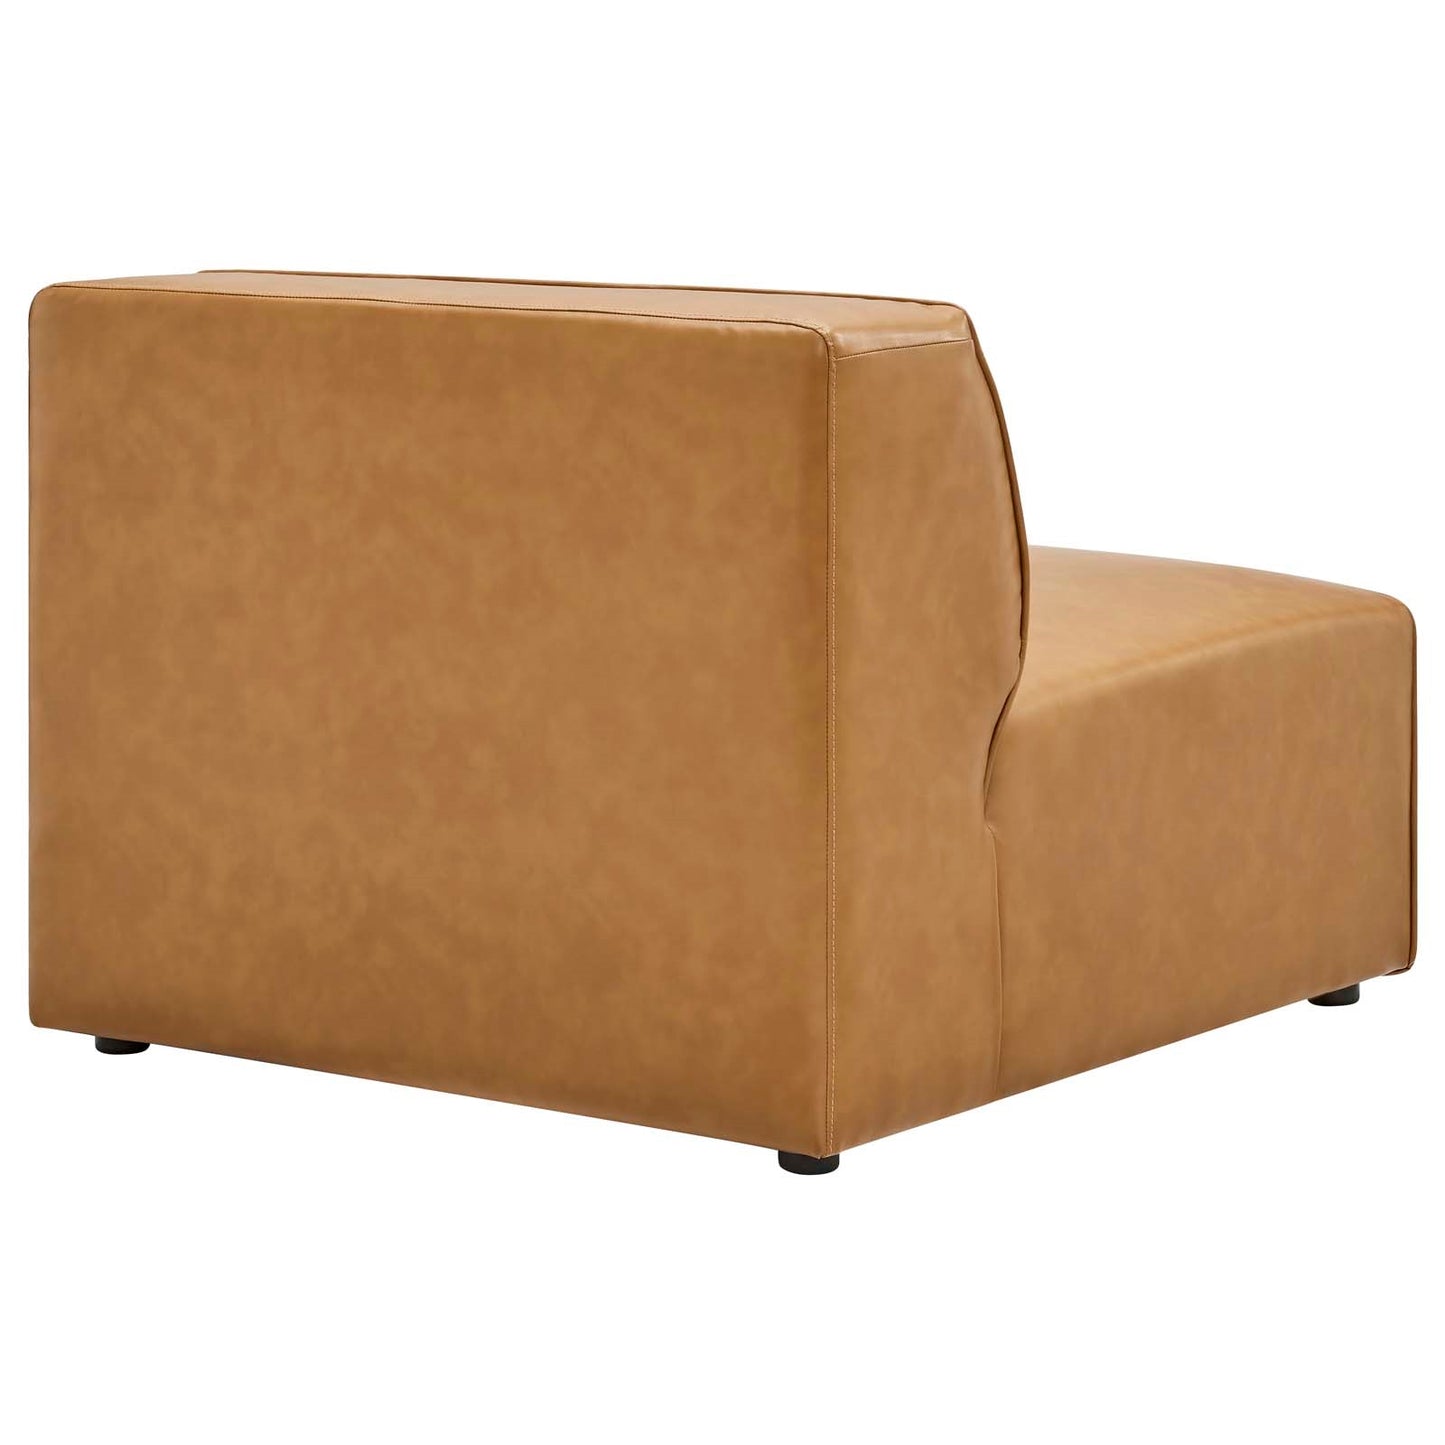 Lane Vegan Leather 5-Piece Sectional Sofa